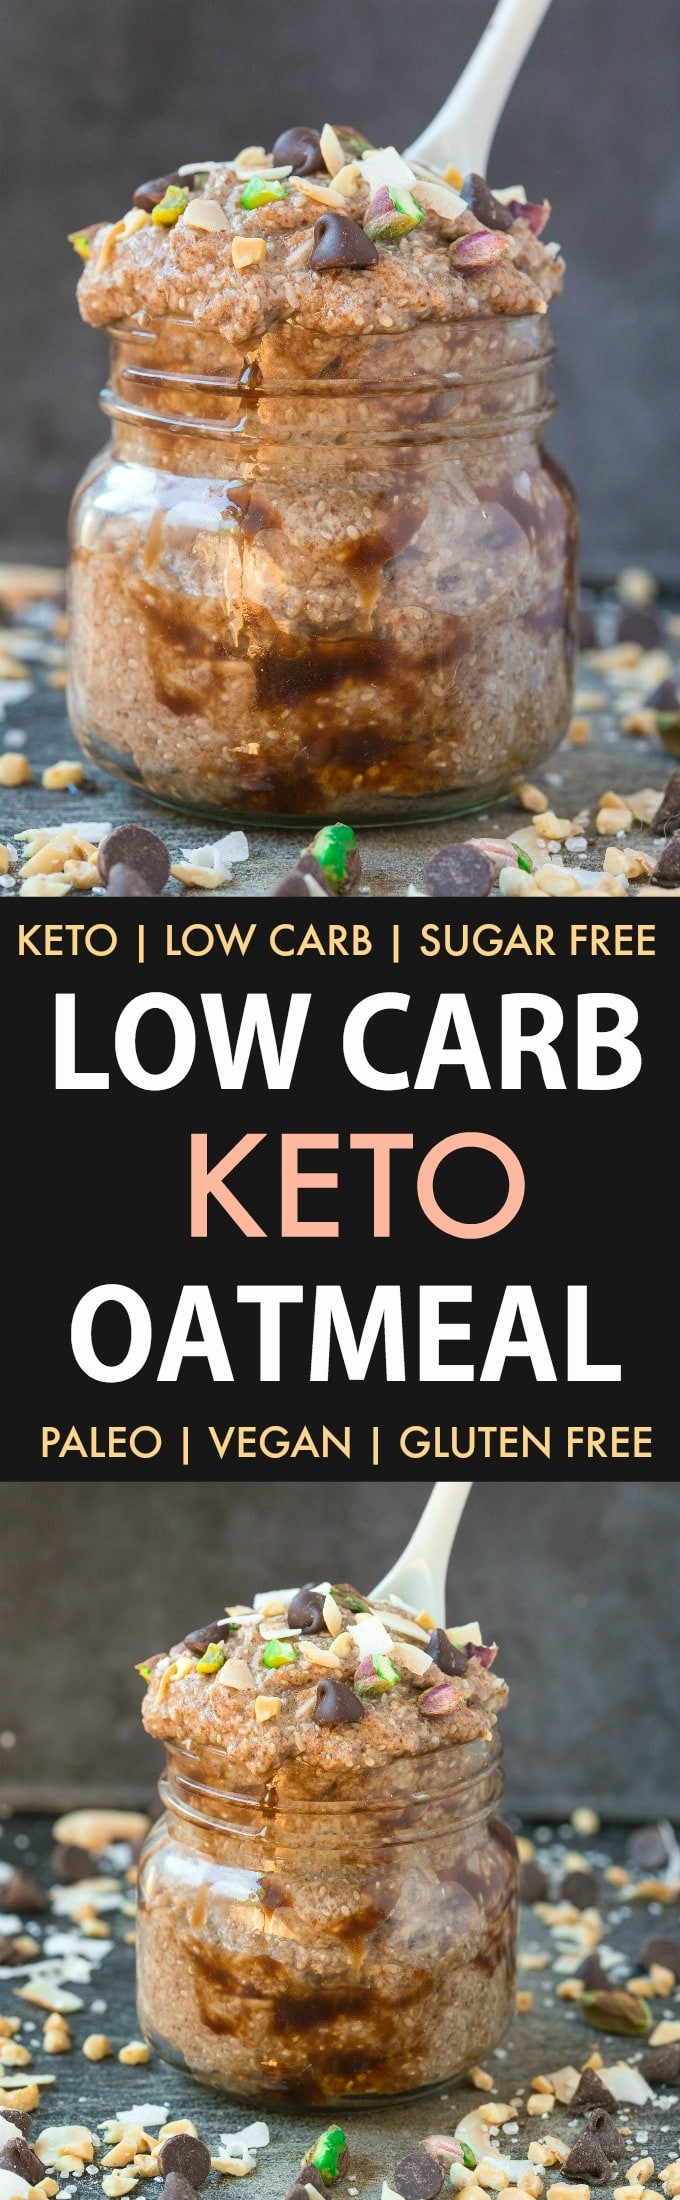 Overnight Oats Healthy Keto
 Low Carb Keto Overnight Oatmeal Paleo Vegan